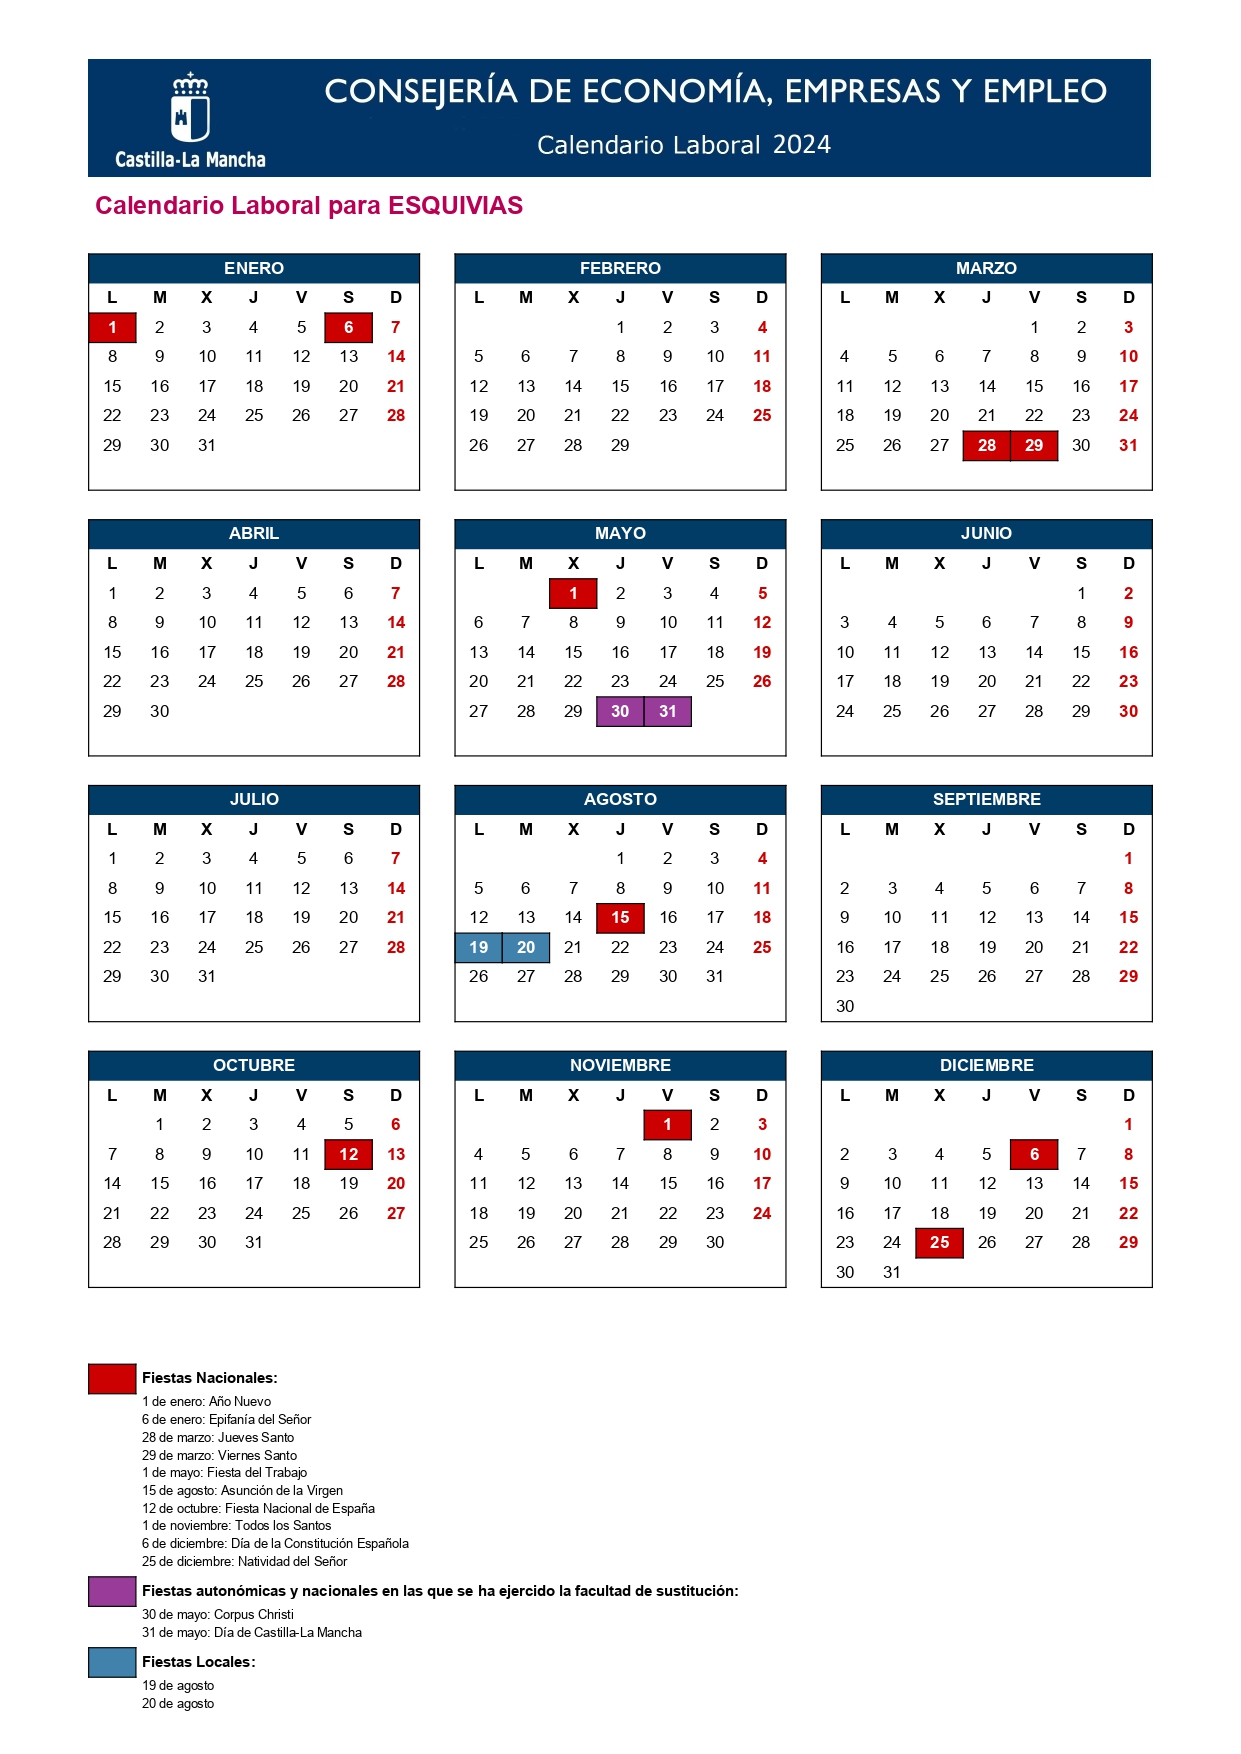 Calendario_Laboral_2024_ESQUIVIAS.jpg